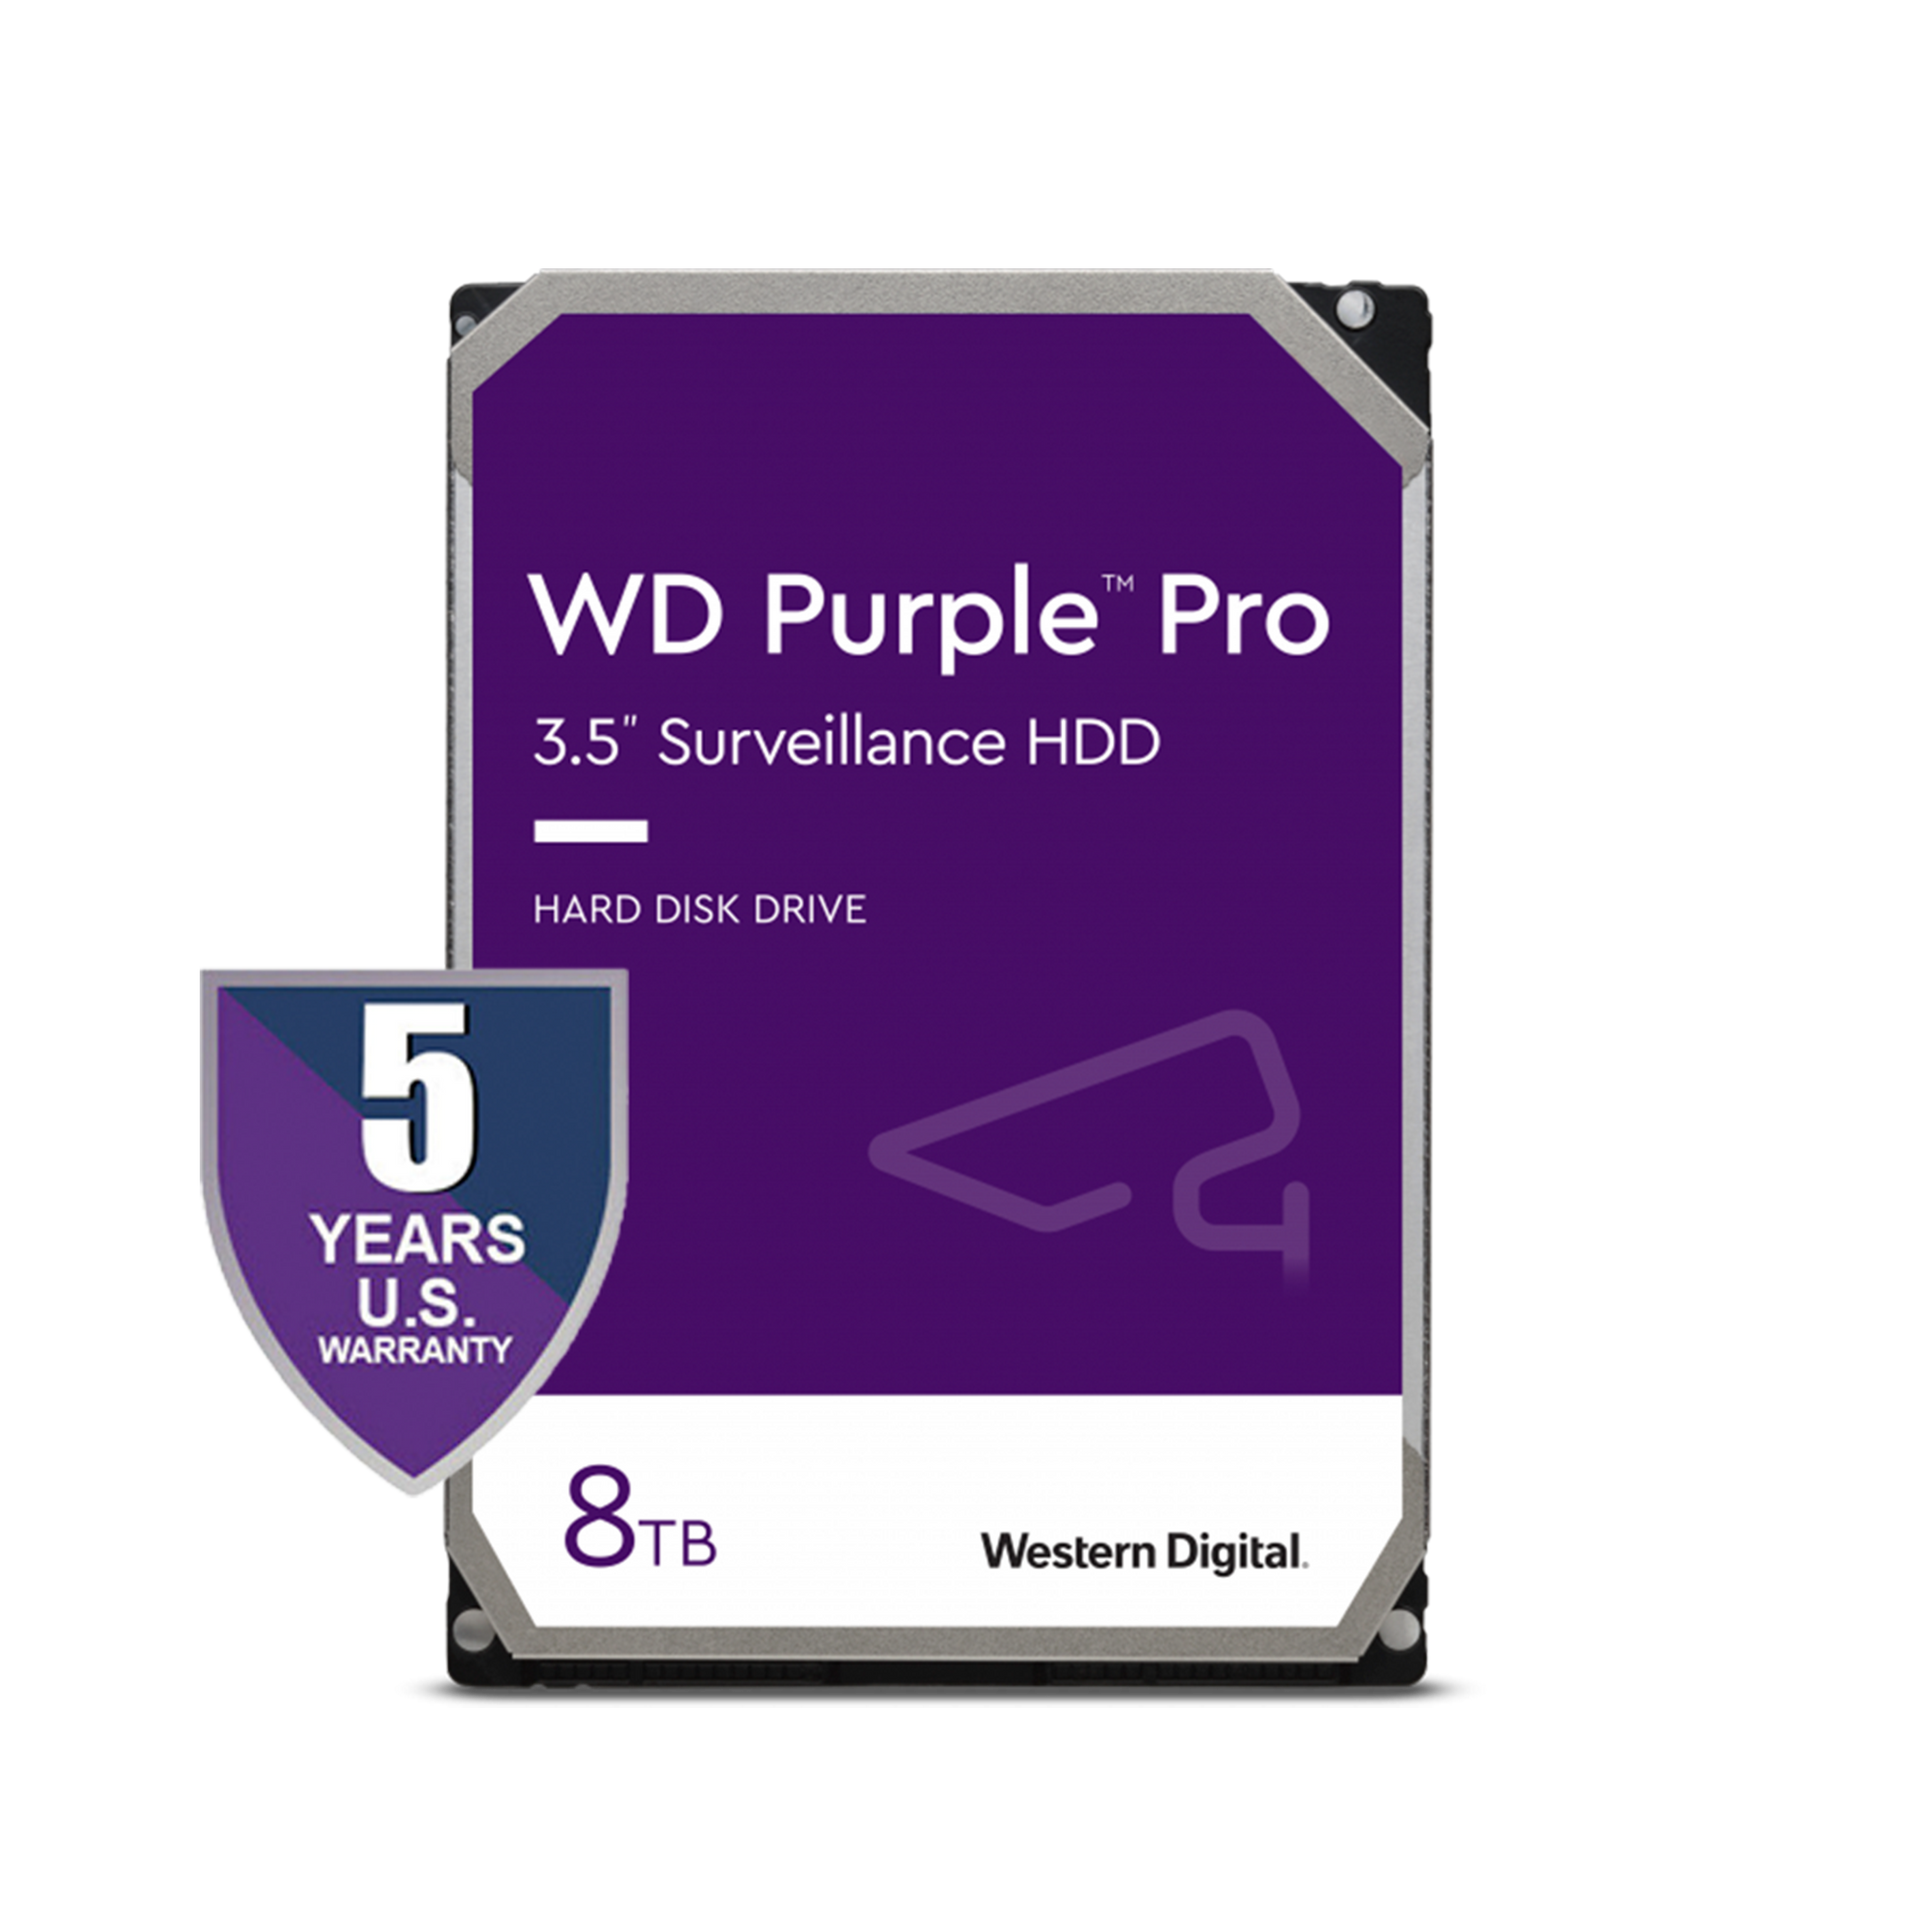 WD Purple Pro Surveillance Hard Drive 8TB Main